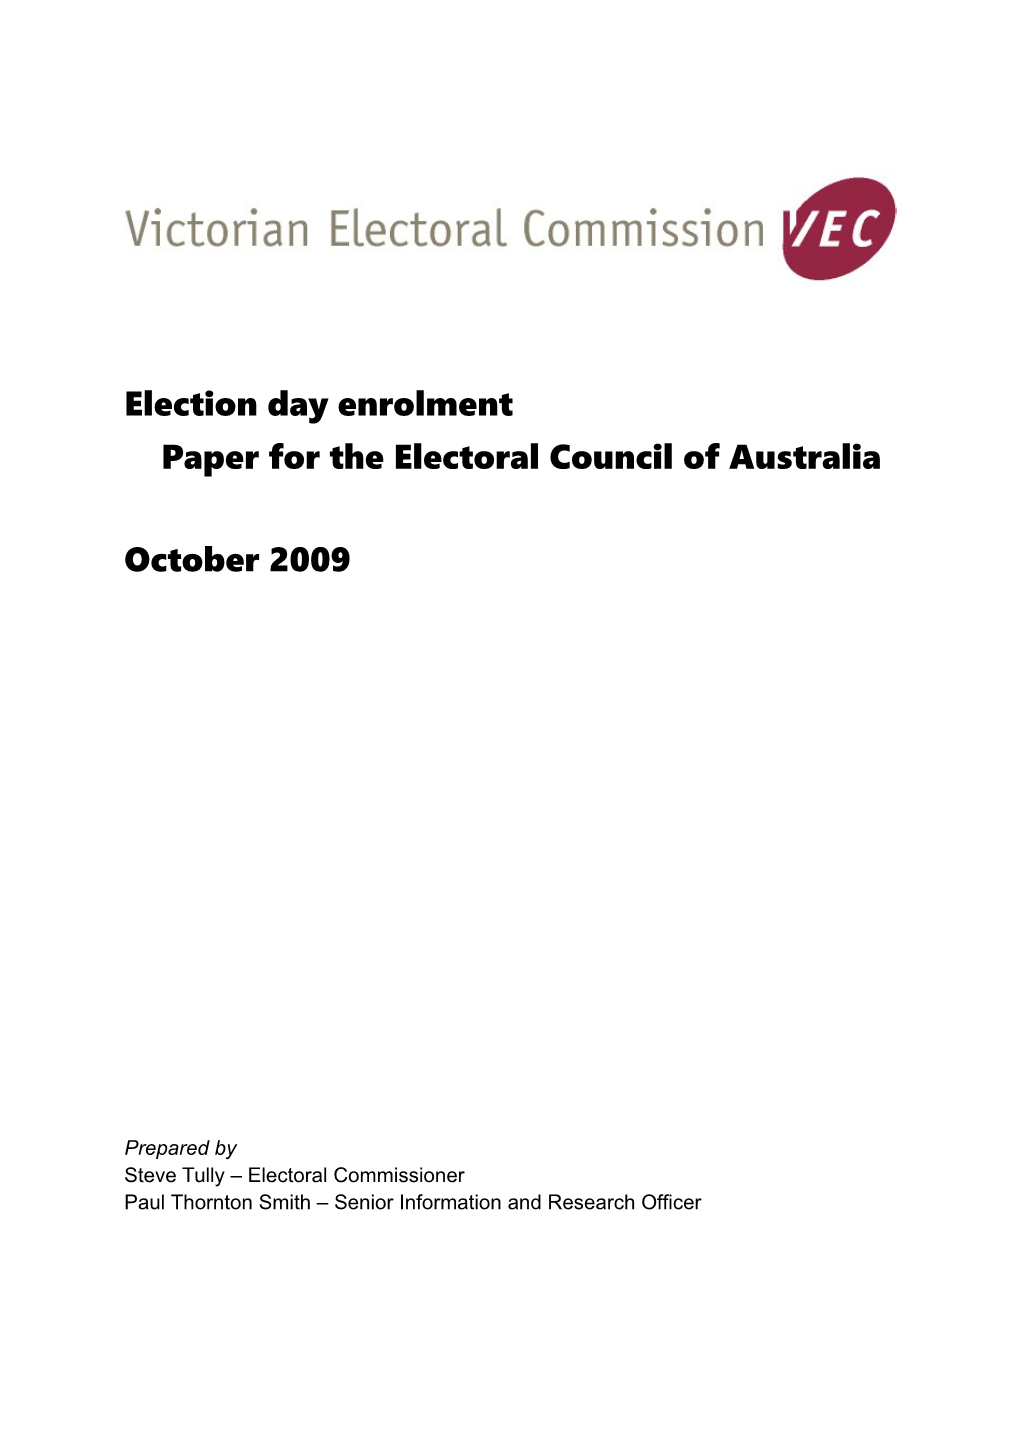 Election Day Enrolmentpaper for the Electoral Council of Australia